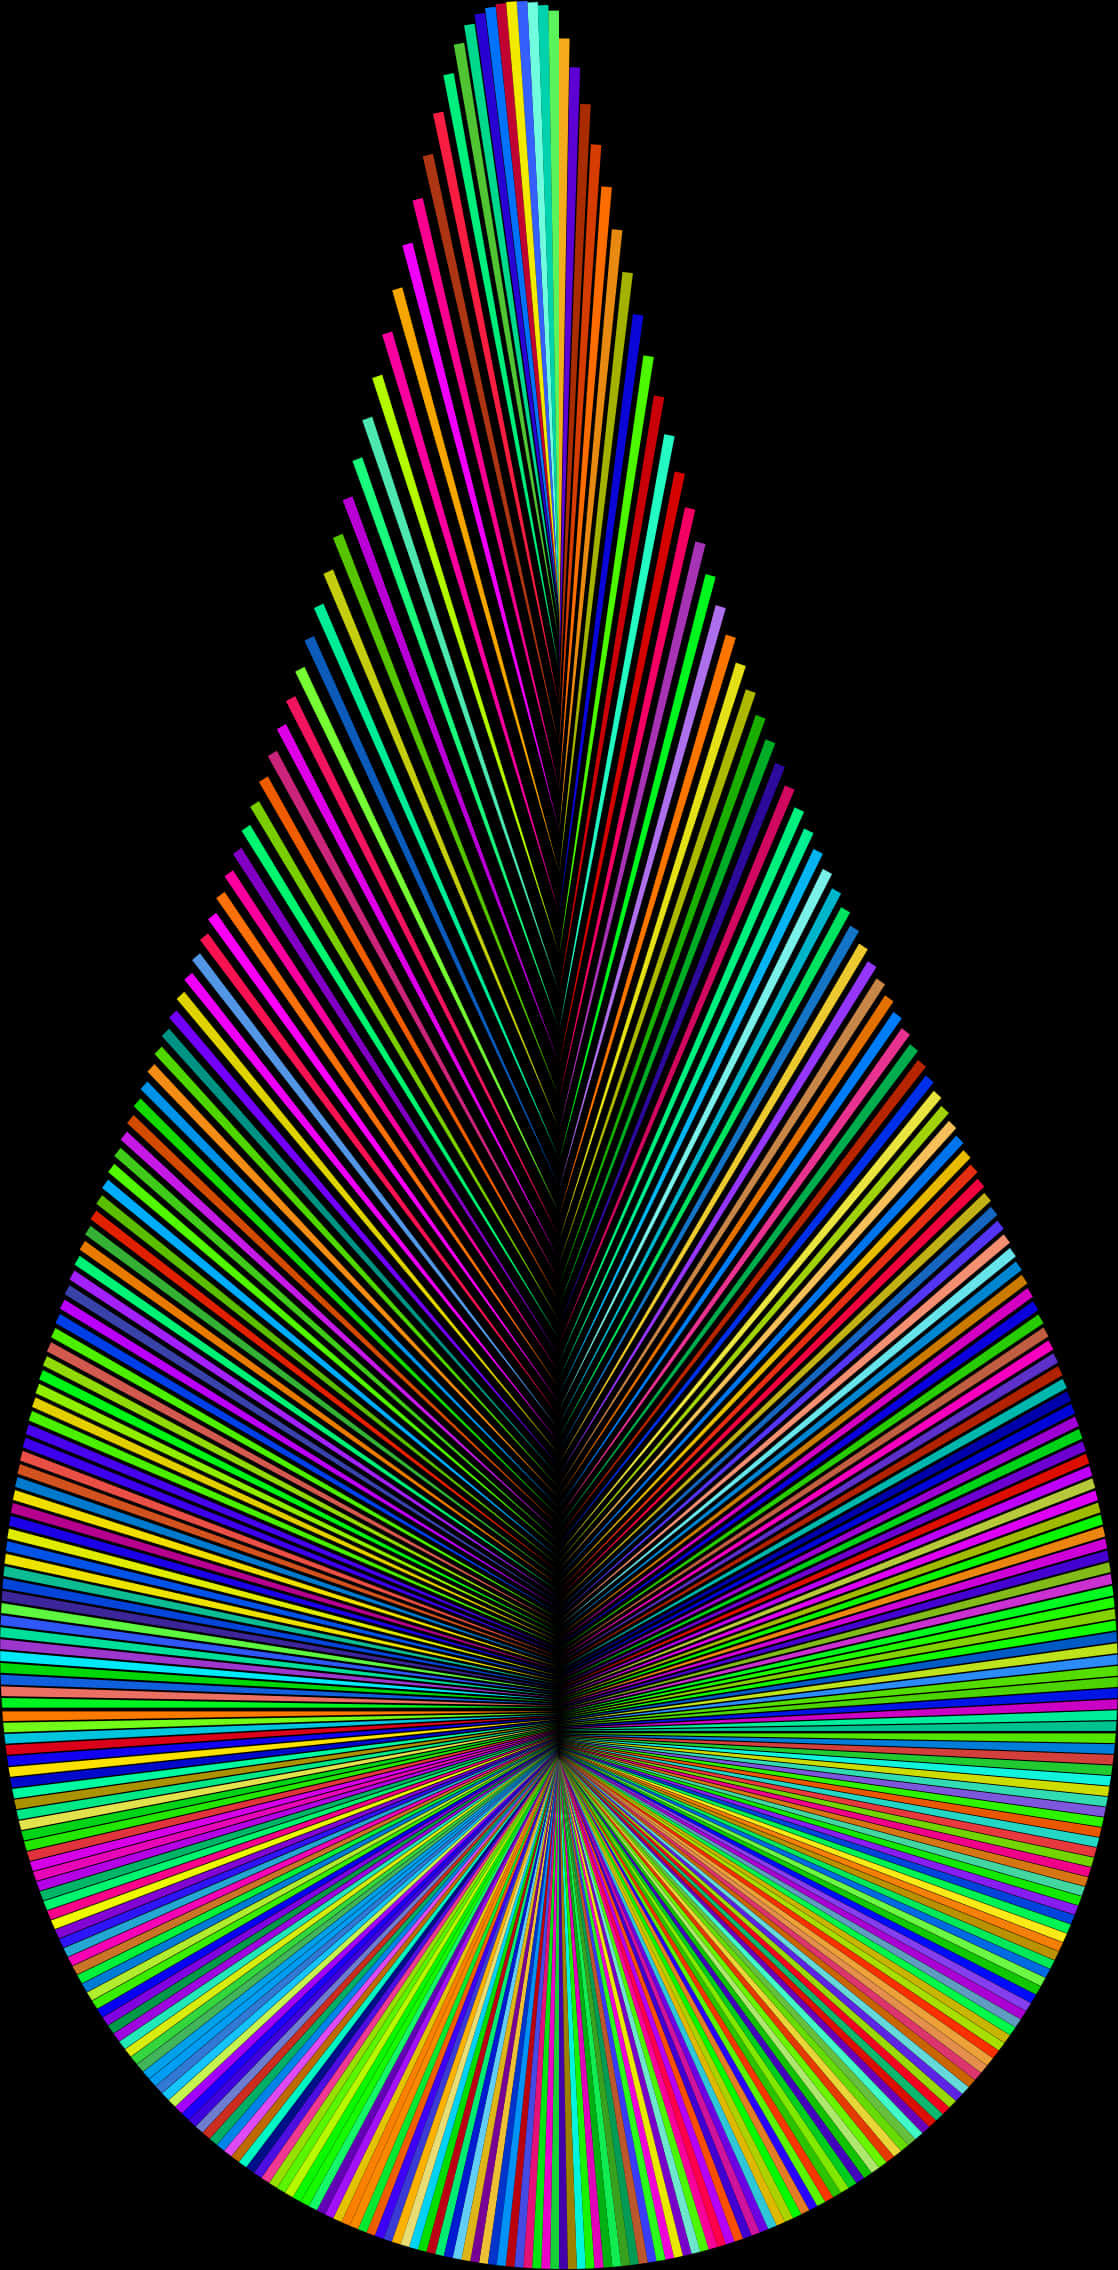 Colorful Droplet Spectrum Art PNG image